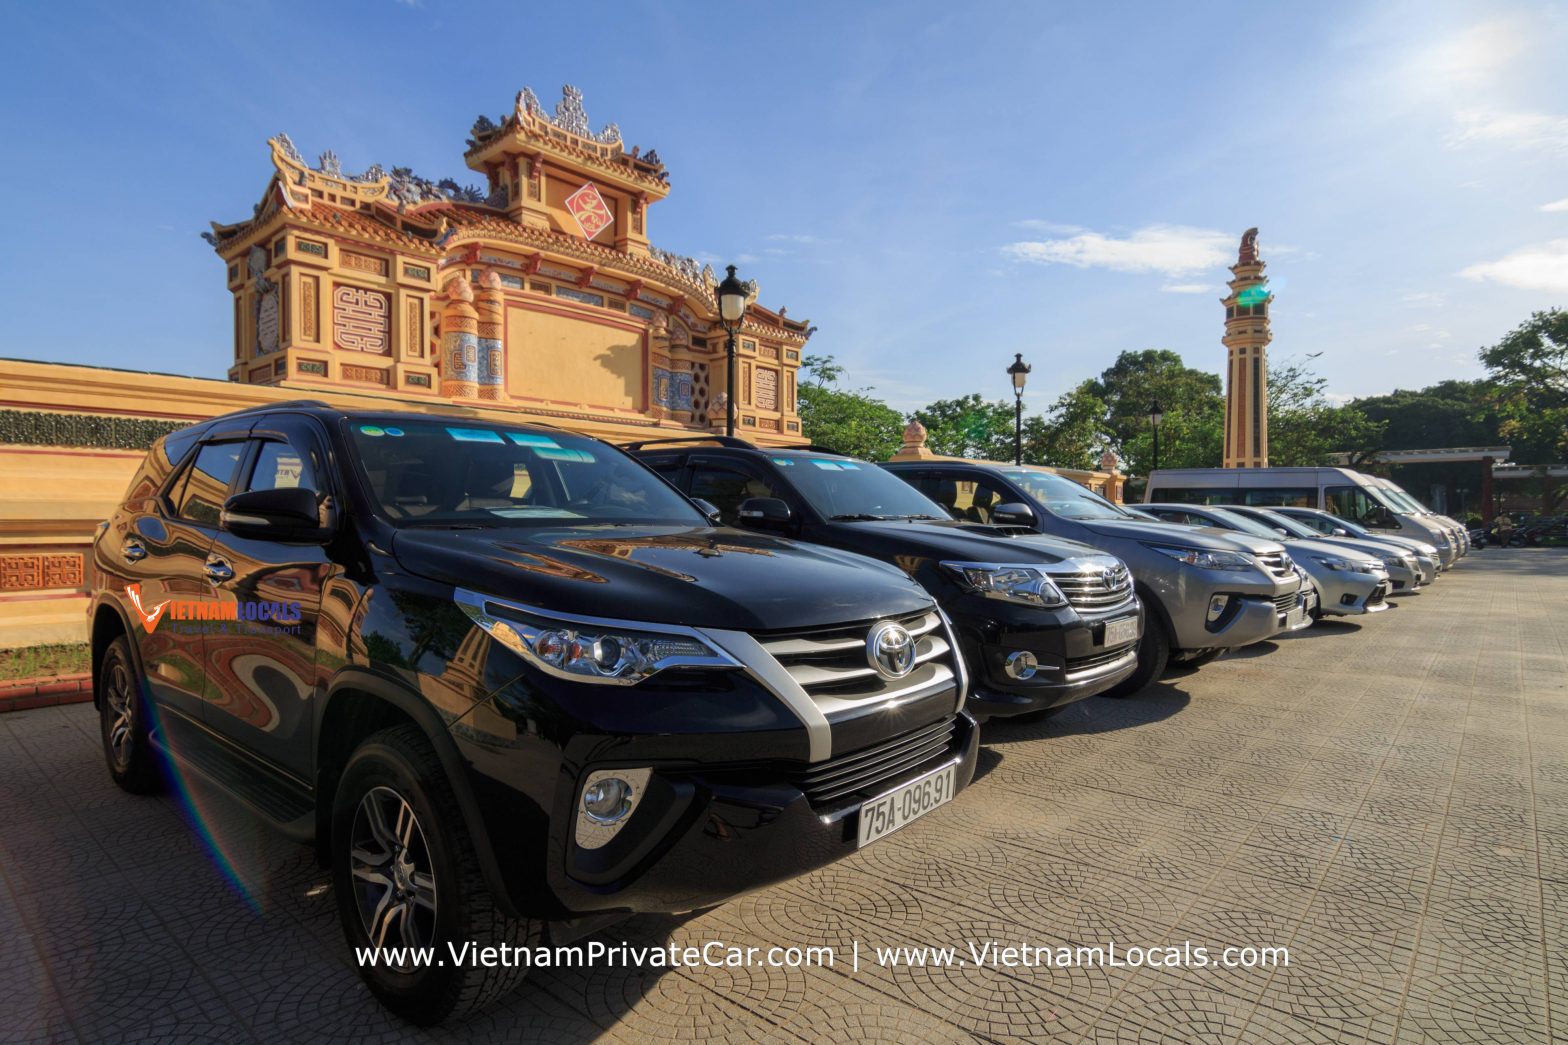 Vietnam Private Car